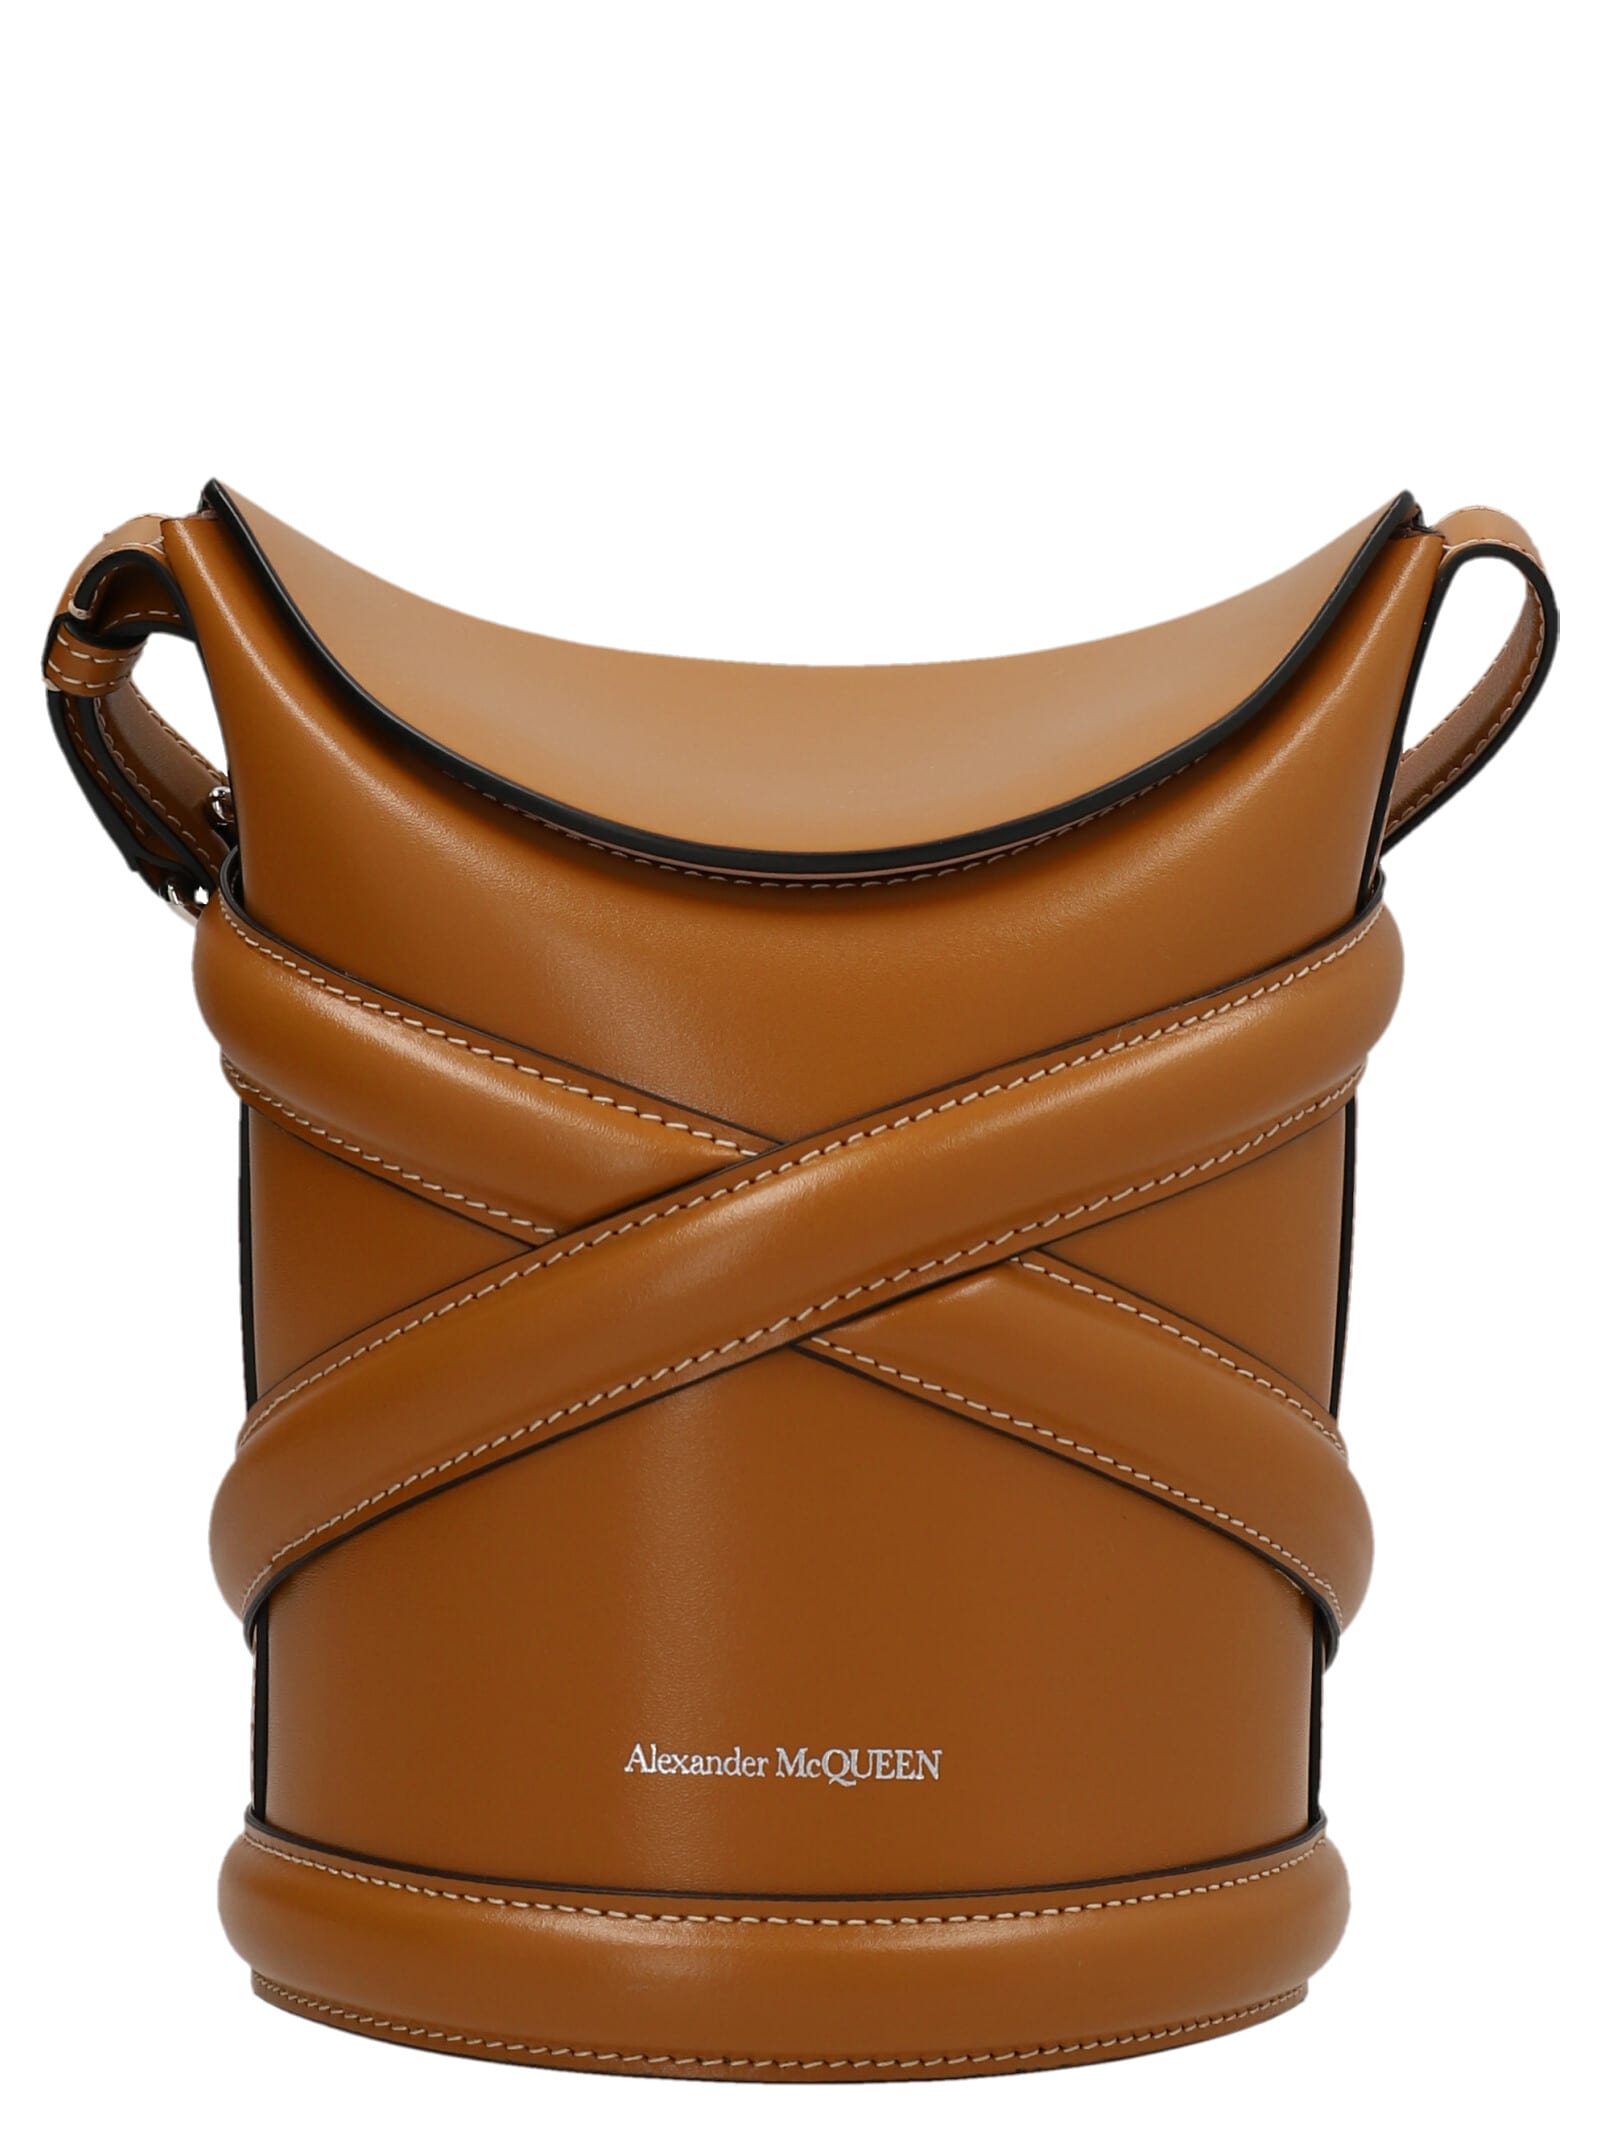 Alexander McQueen the Curve Small Bucket Bag